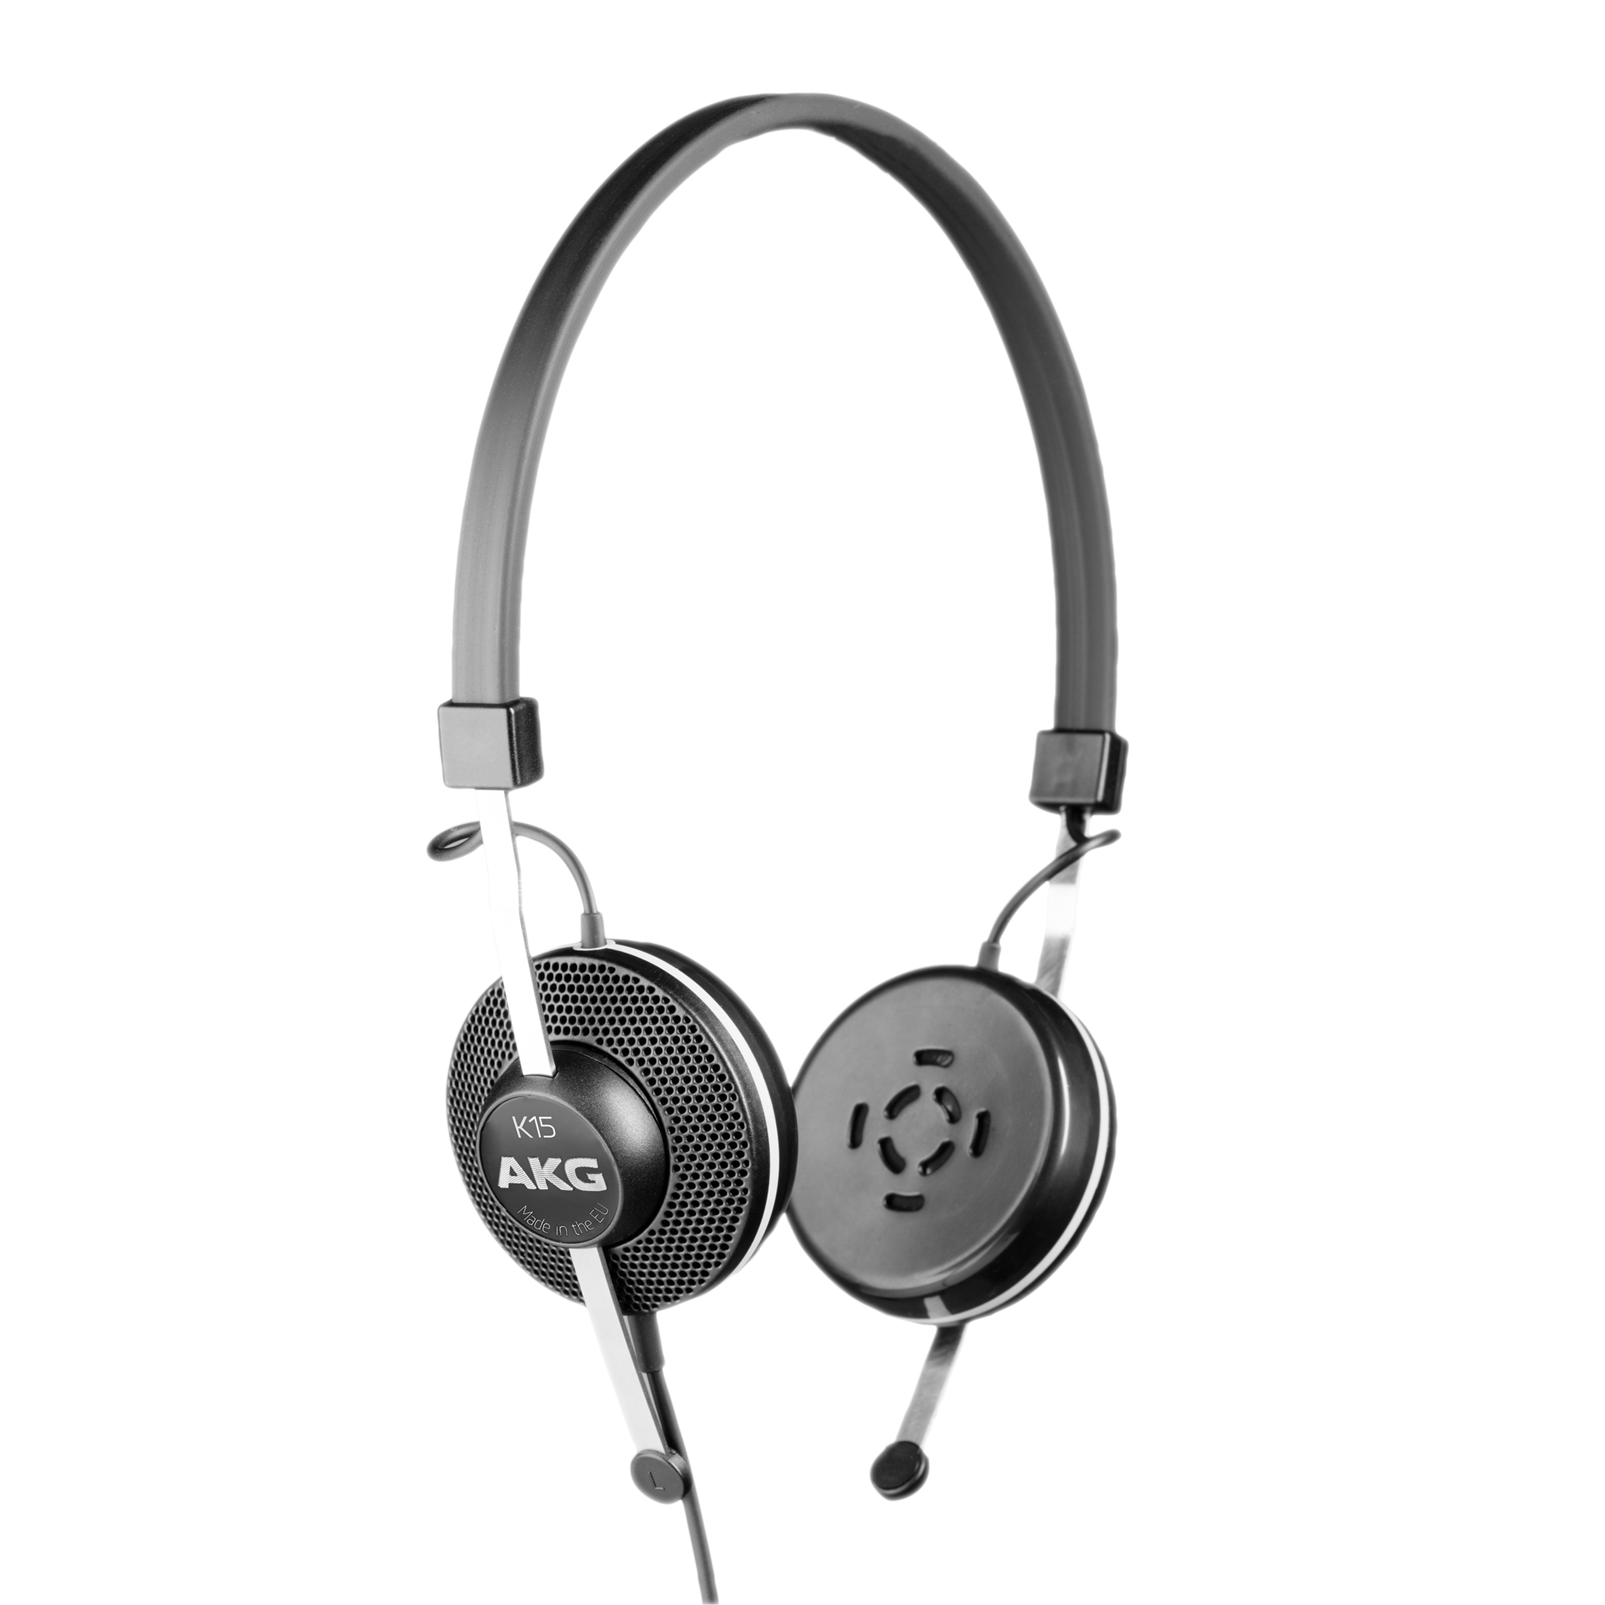 K15 (B-Stock) - Black - High-performance conference headphones - Hero